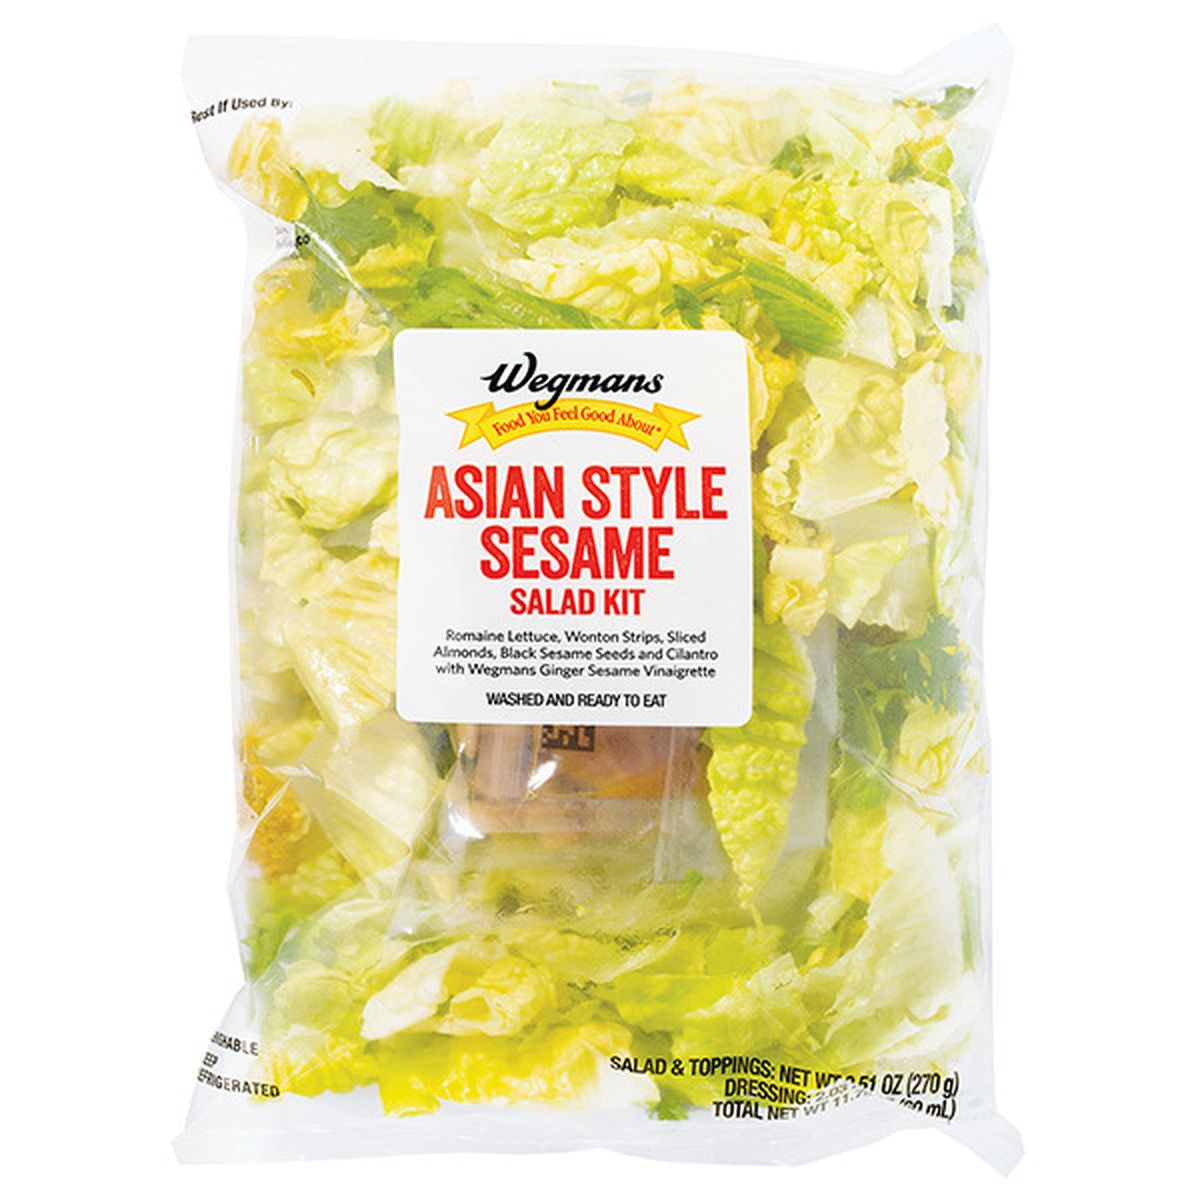 Calories in Wegmans Asian Style Sesame Salad Kit